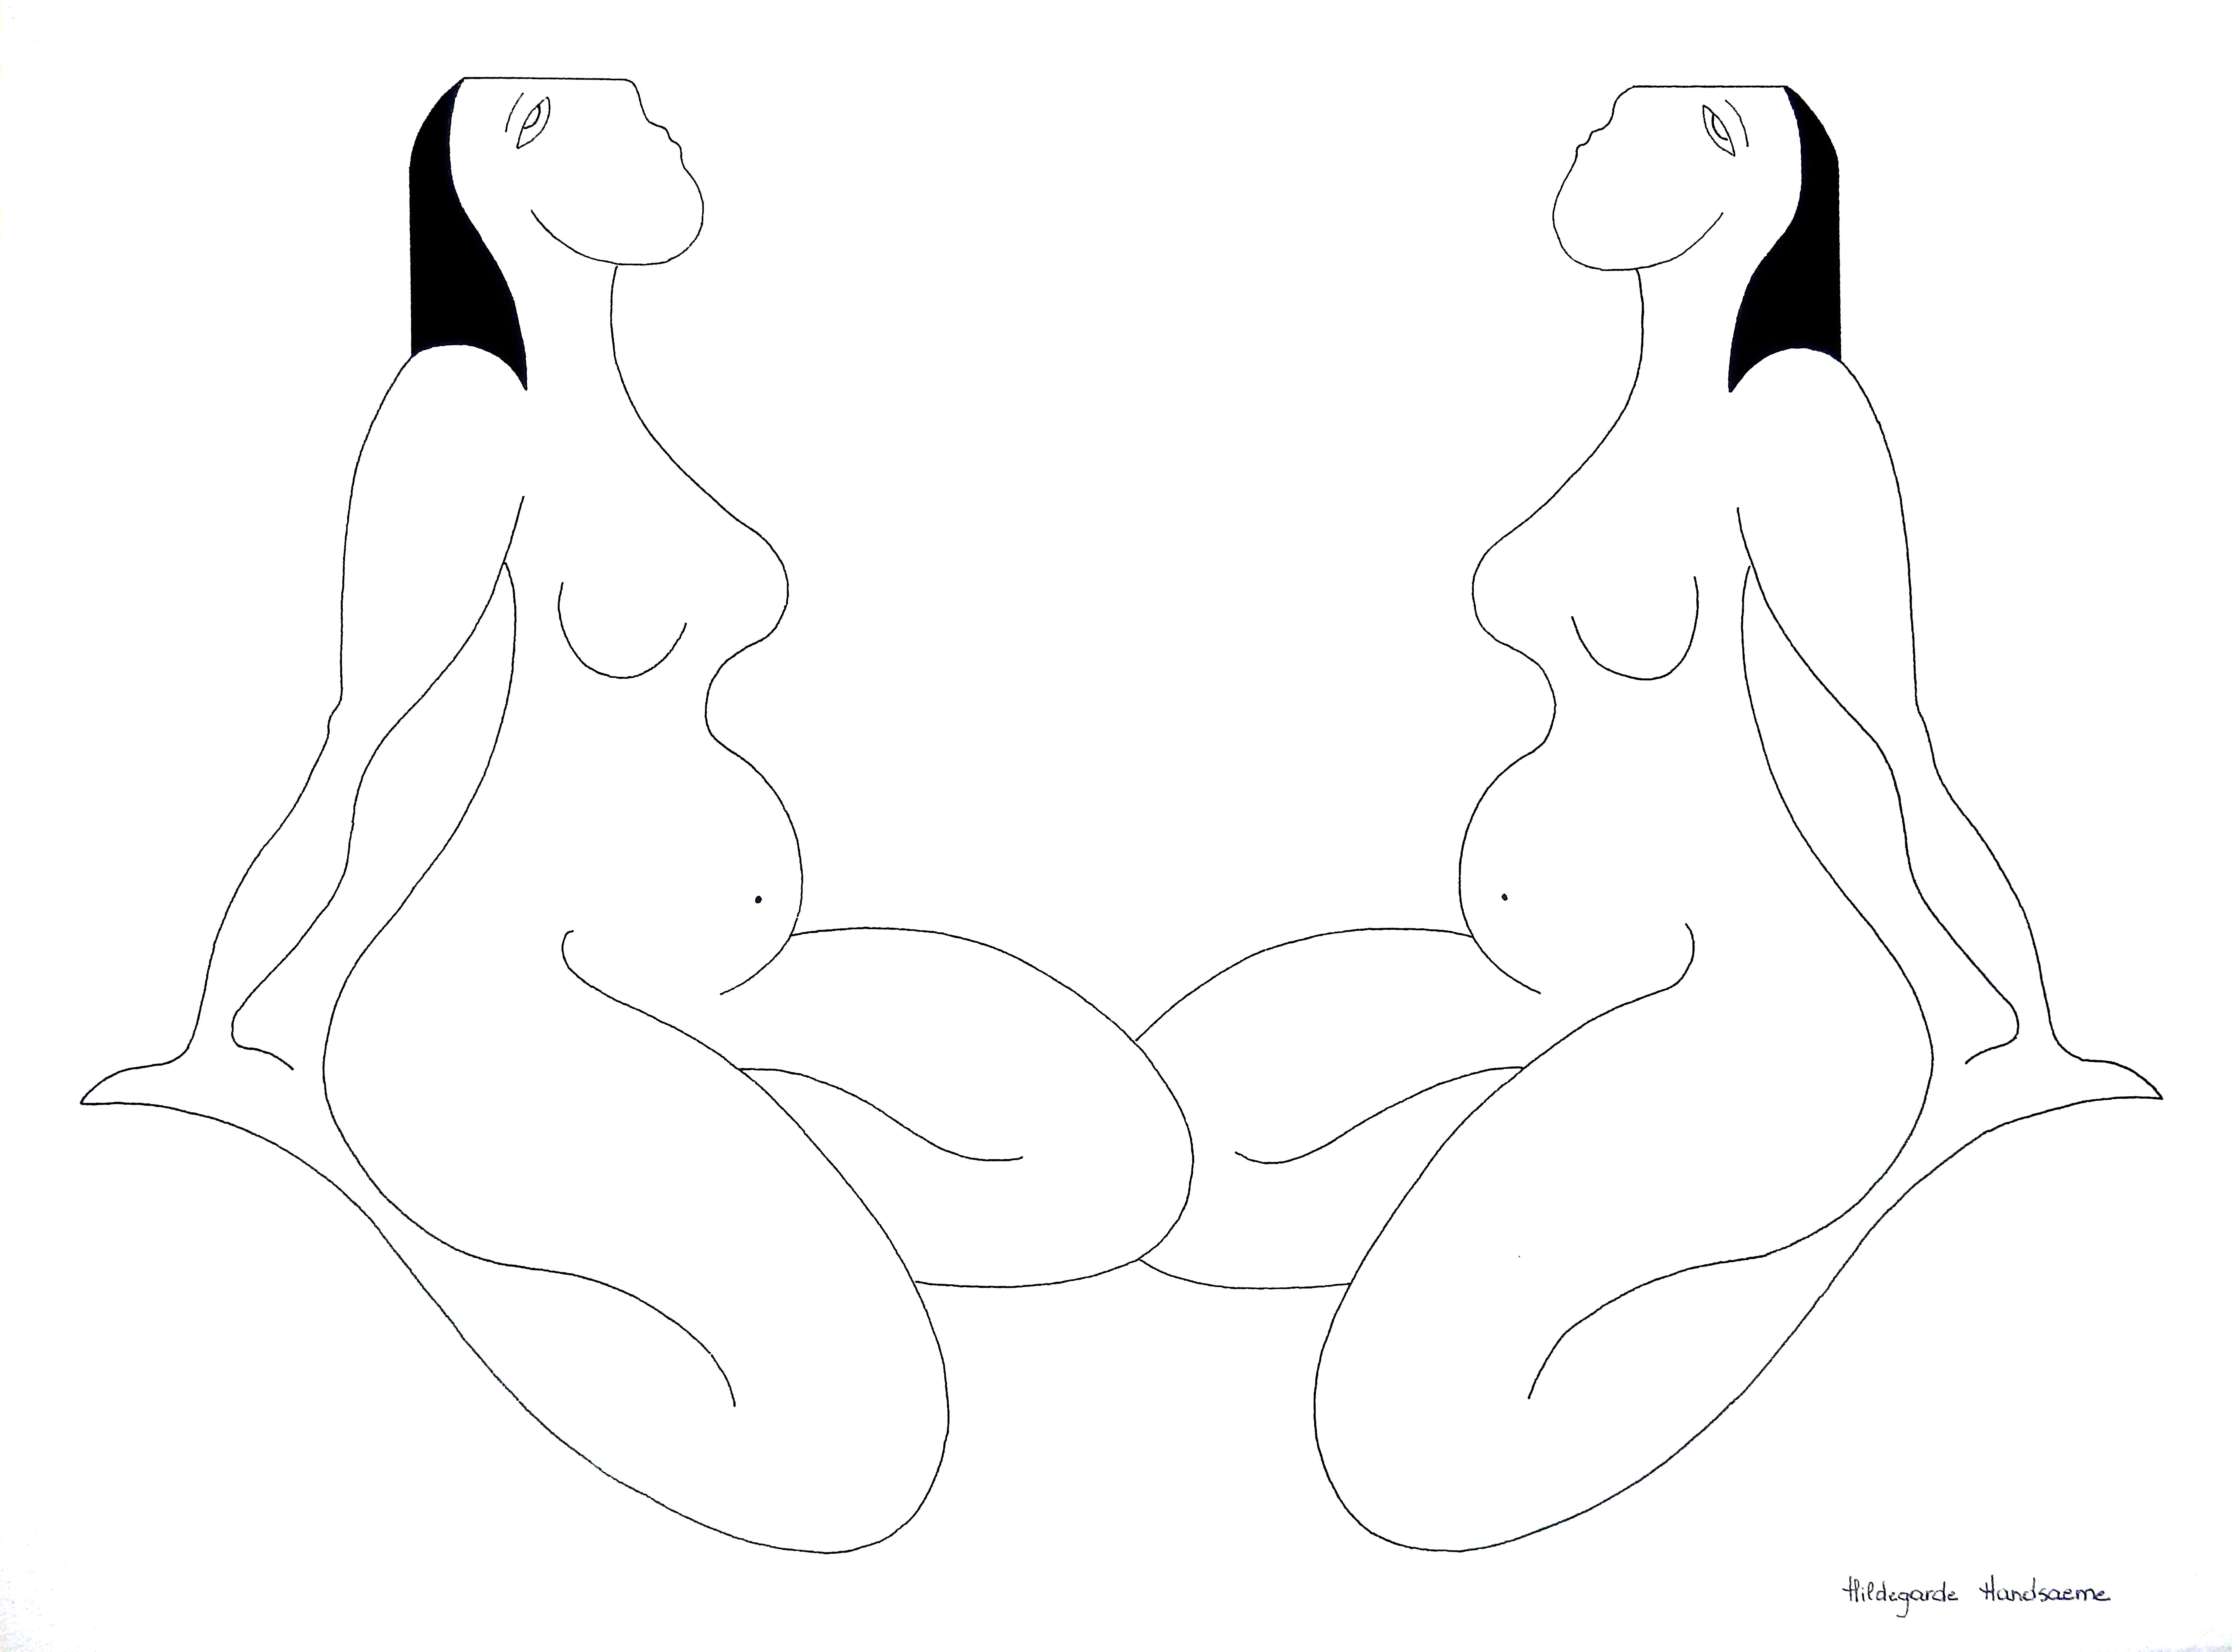 Hildegarde Handsaeme Abstract Drawing - Les Feminines, Modern Minimalist Abstract Geometric Art Ink Drawing Woman Black